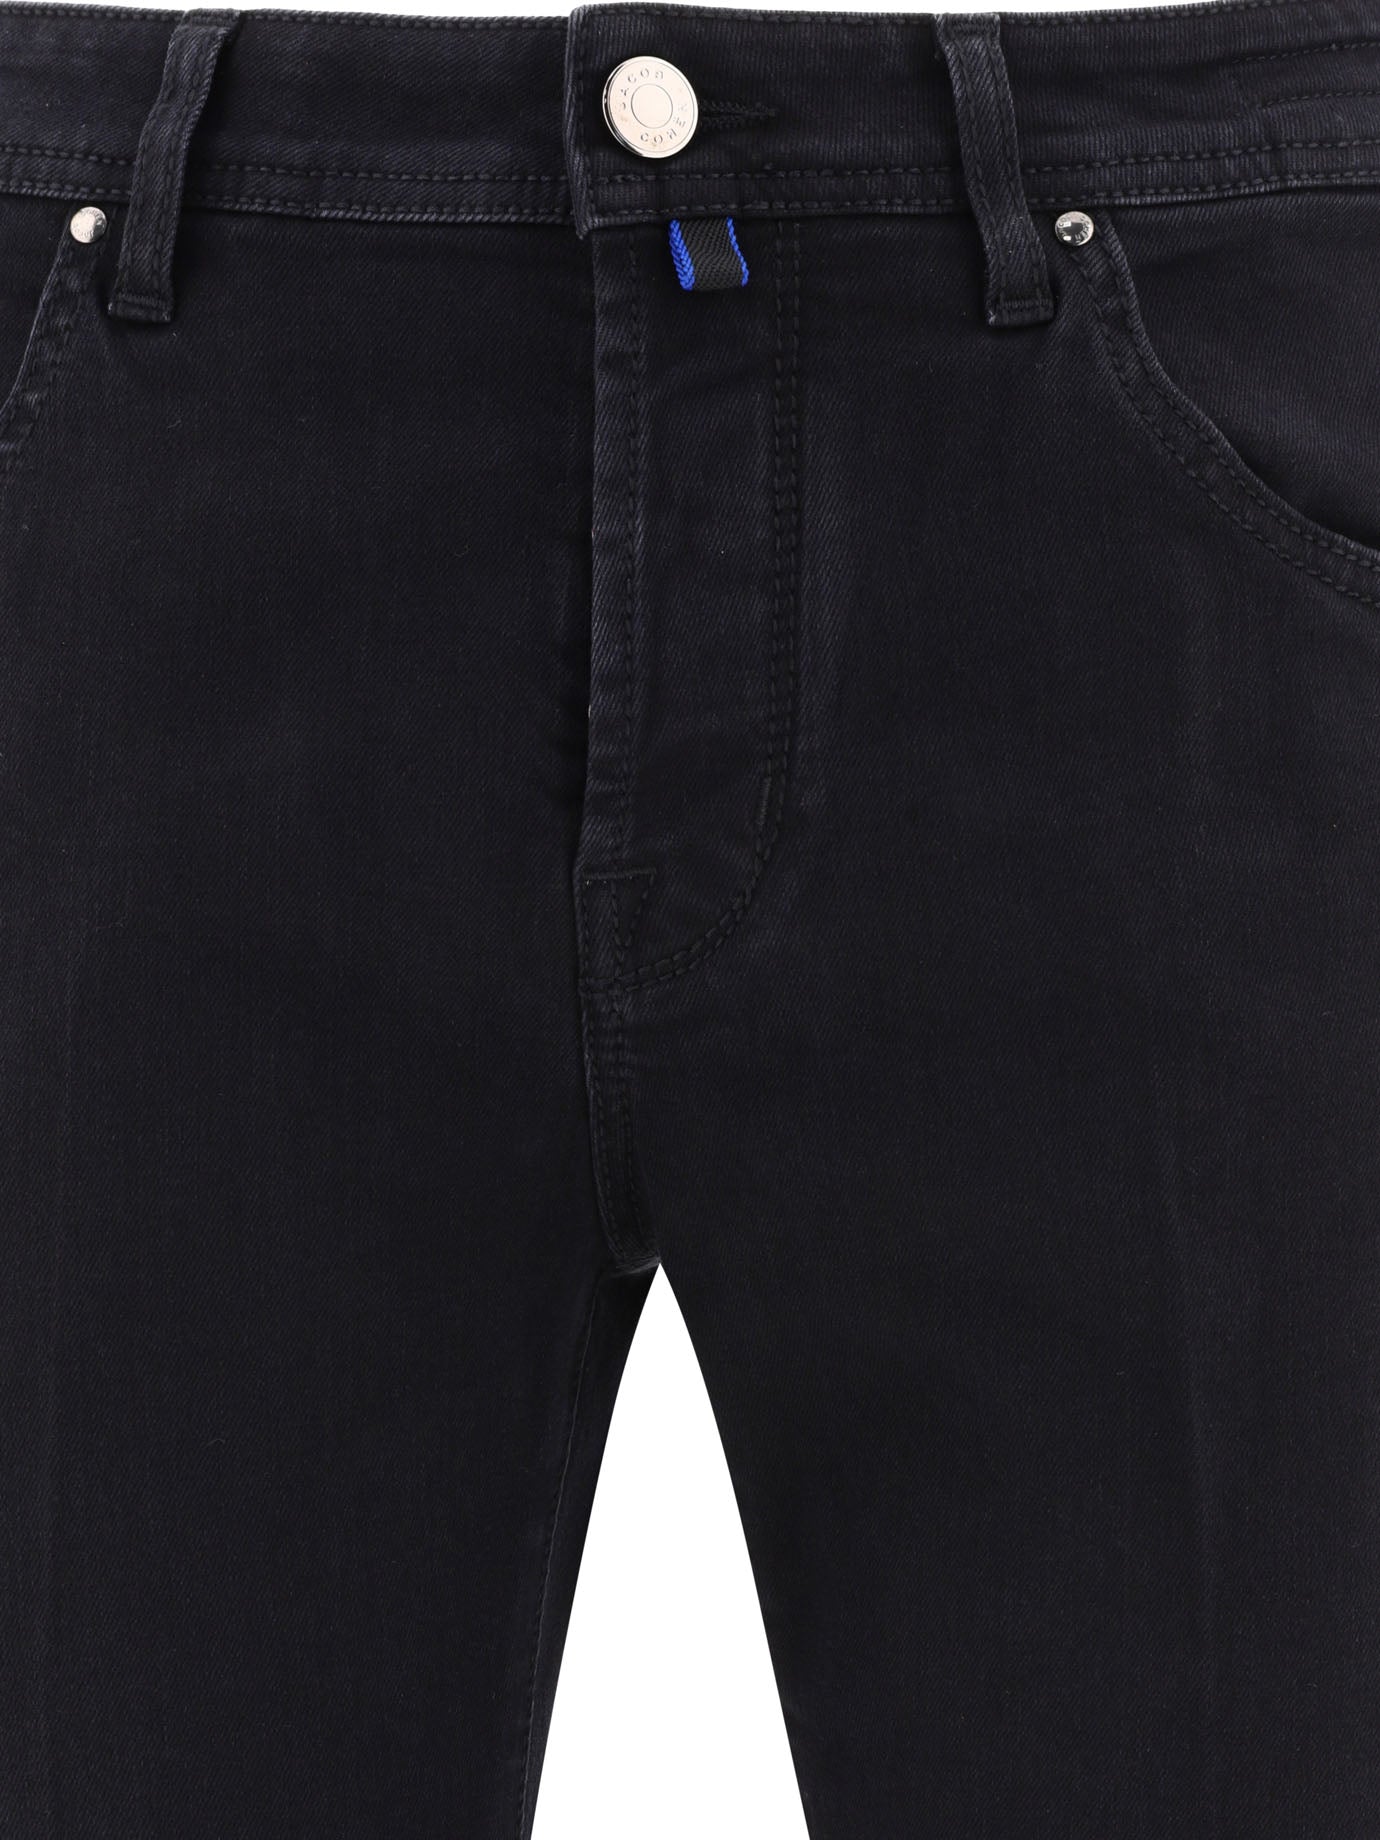 SCOTT-PANTS W'S TRAIL CONTESSA SIGN BLACK - Mountain bike trousers